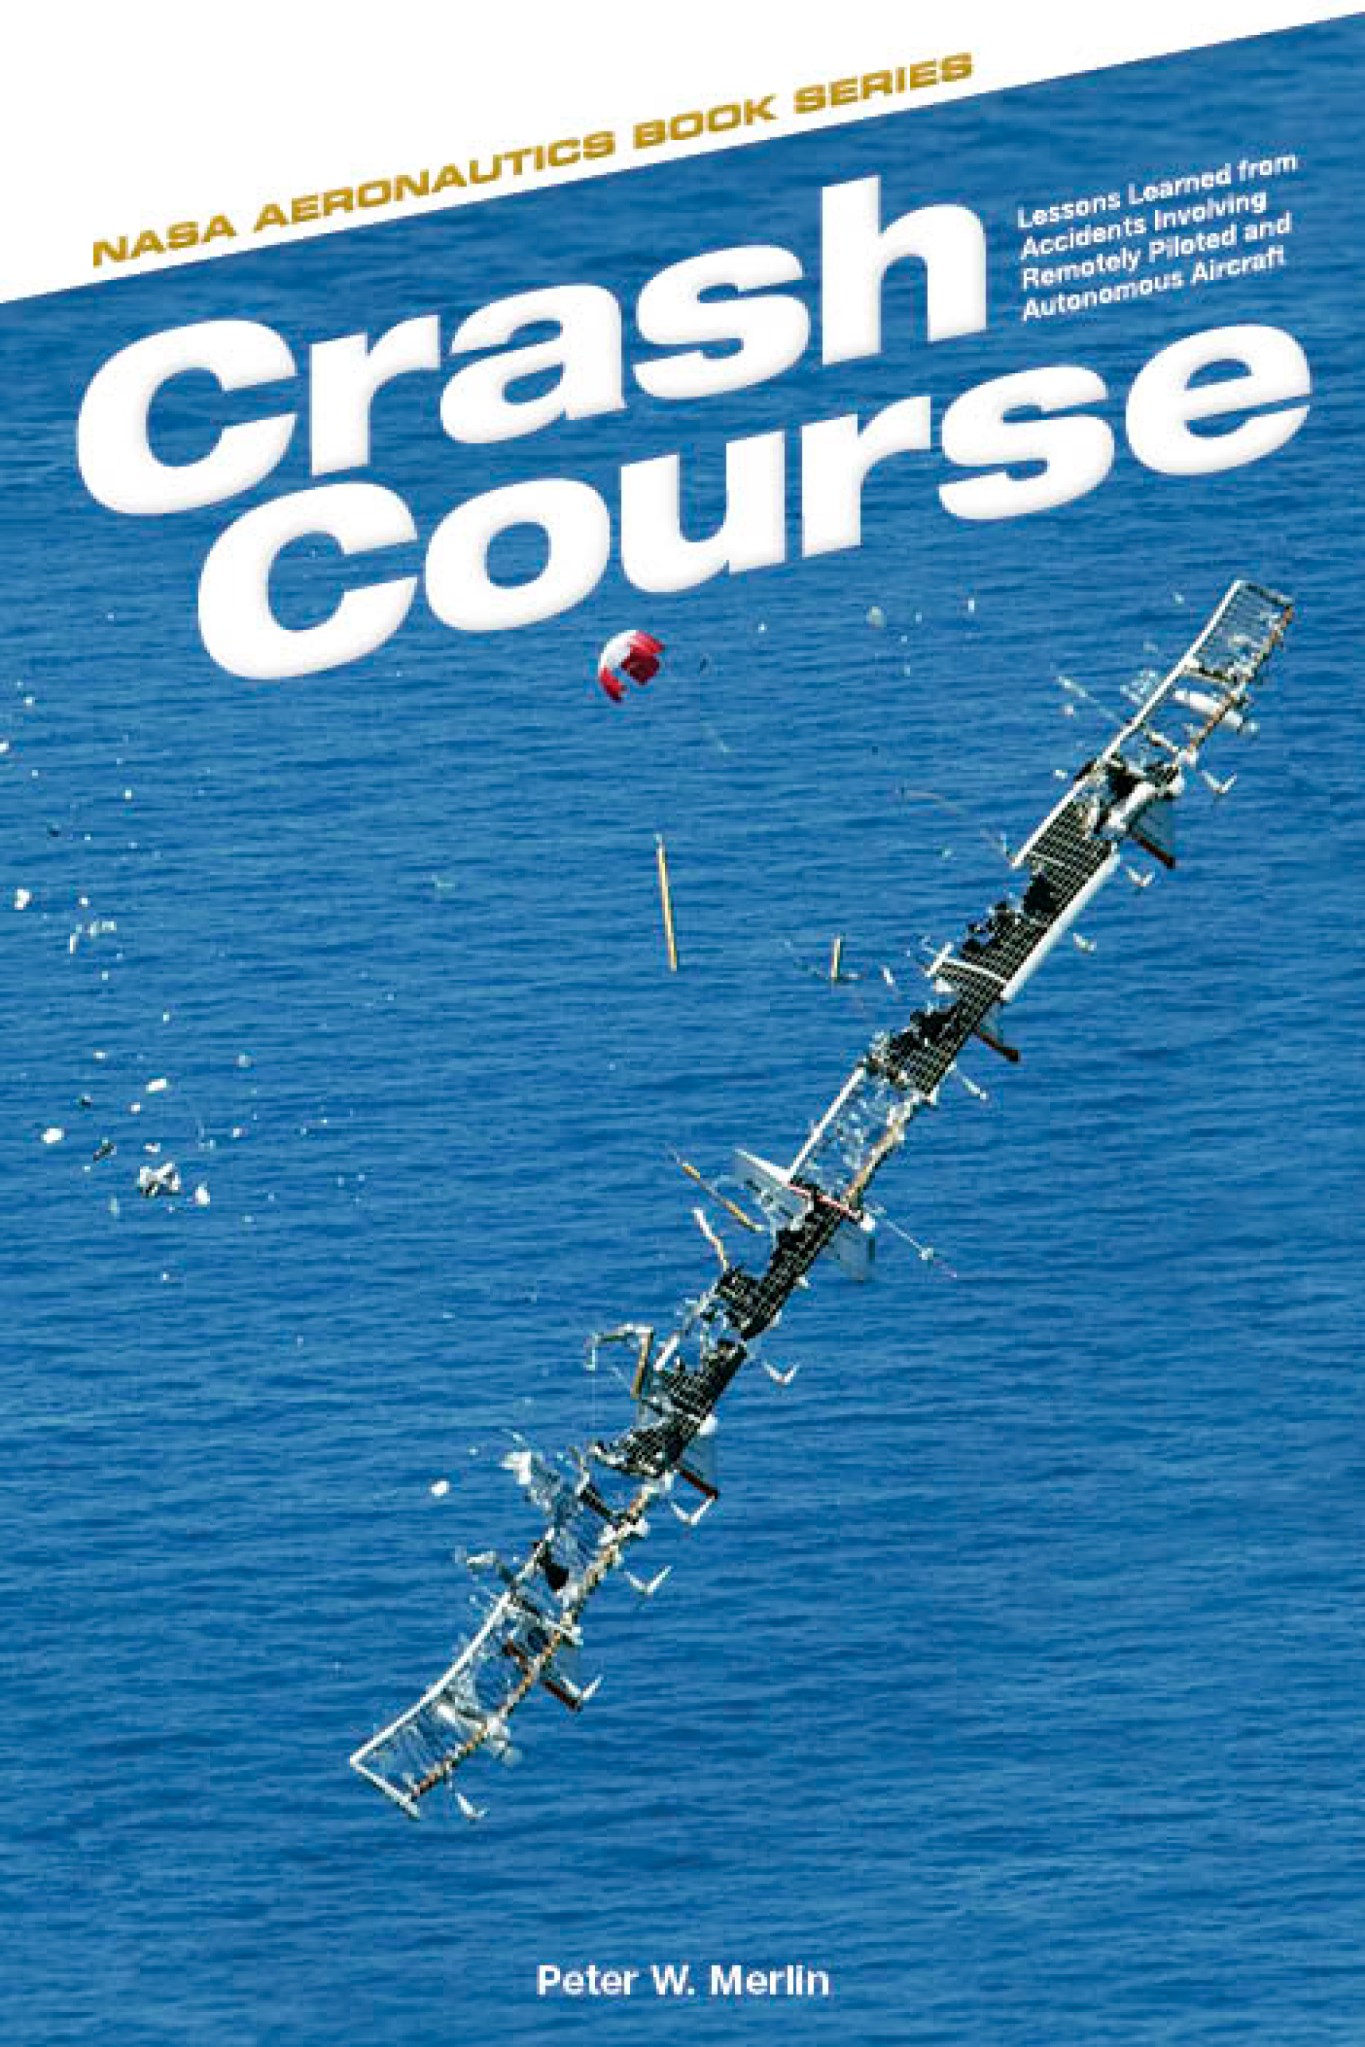 Crash Course book cover showing the Helios Prototype sheds parts as it plummets toward the ocean. 